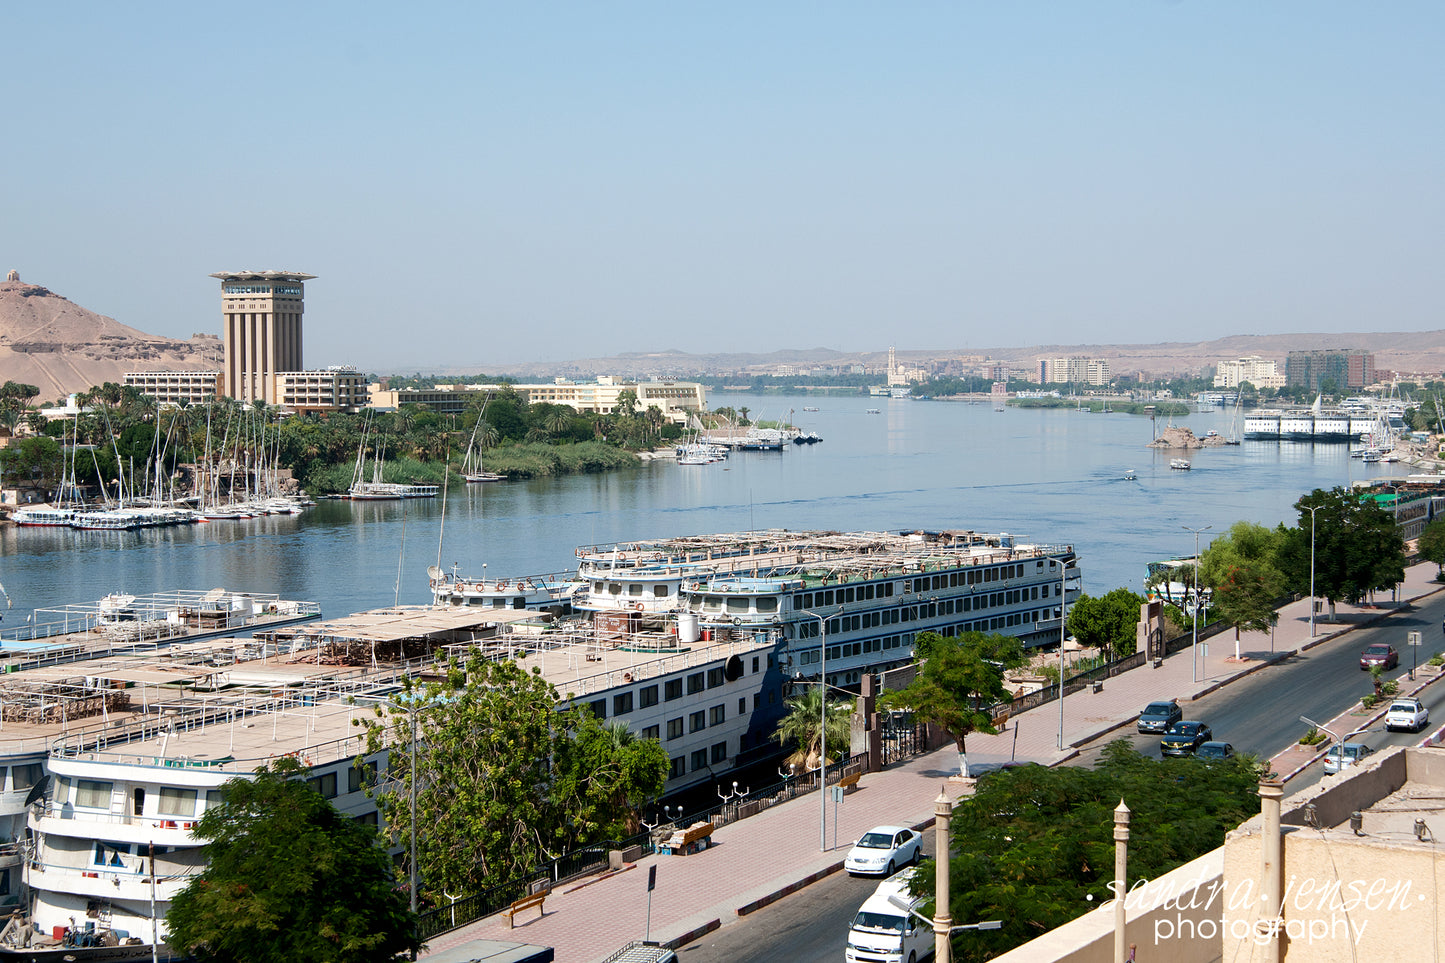 Print - Egypt, Aswan - The Nile